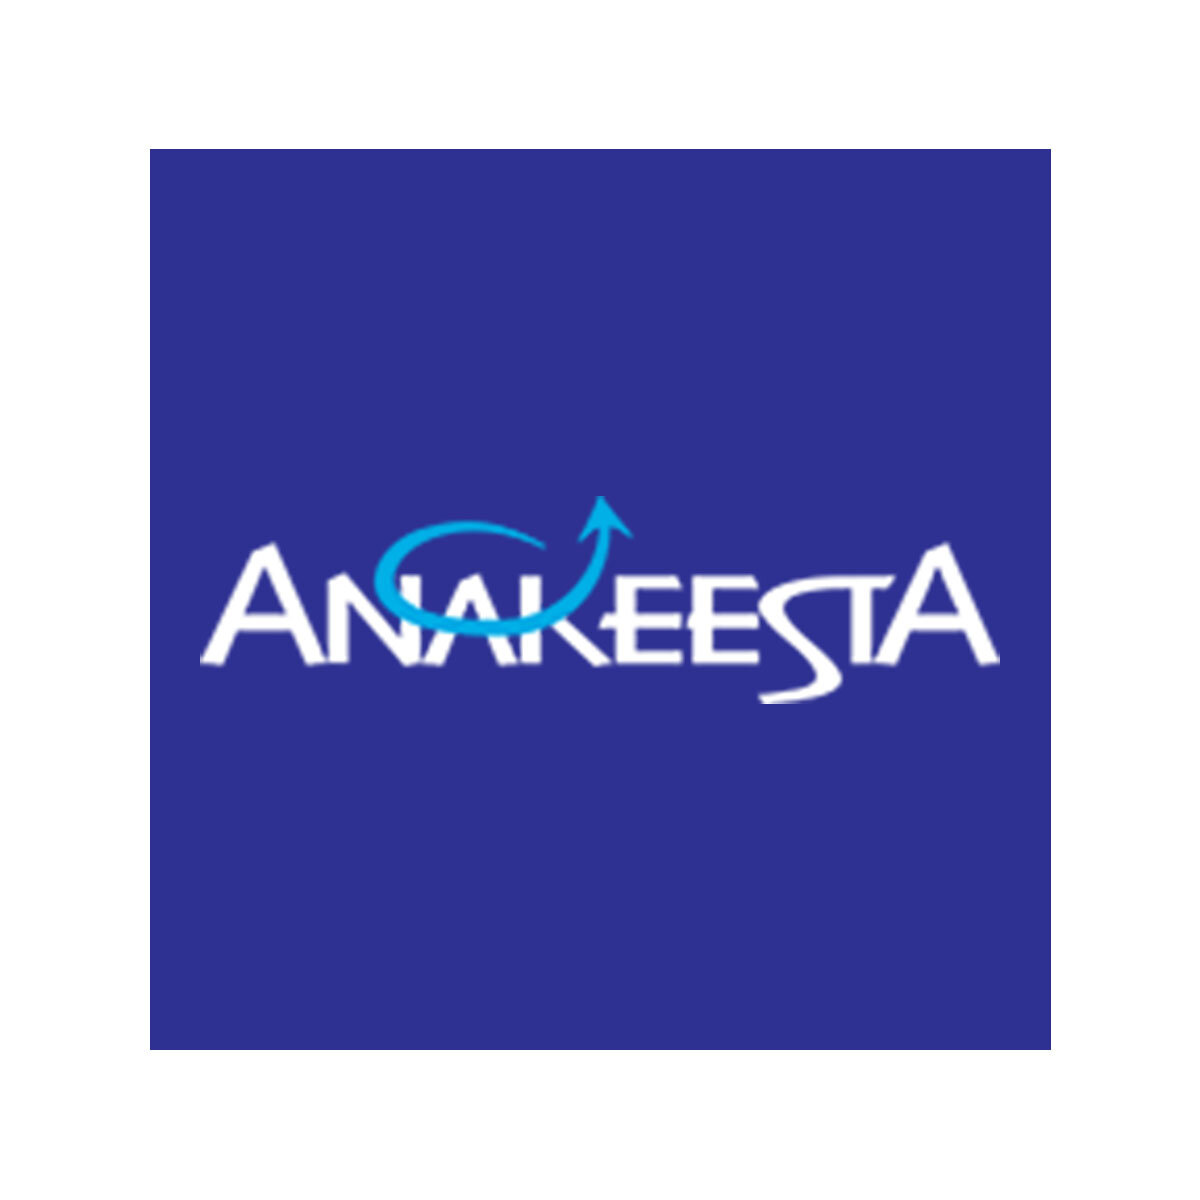 Anakeesta SMCB Logo.jpg